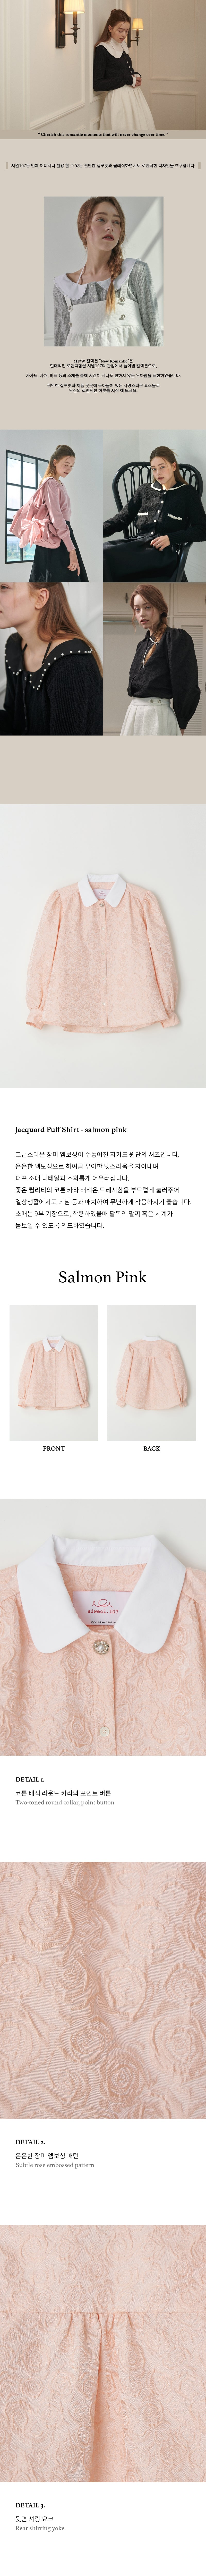 jacquard puff shirt (salmon pink)